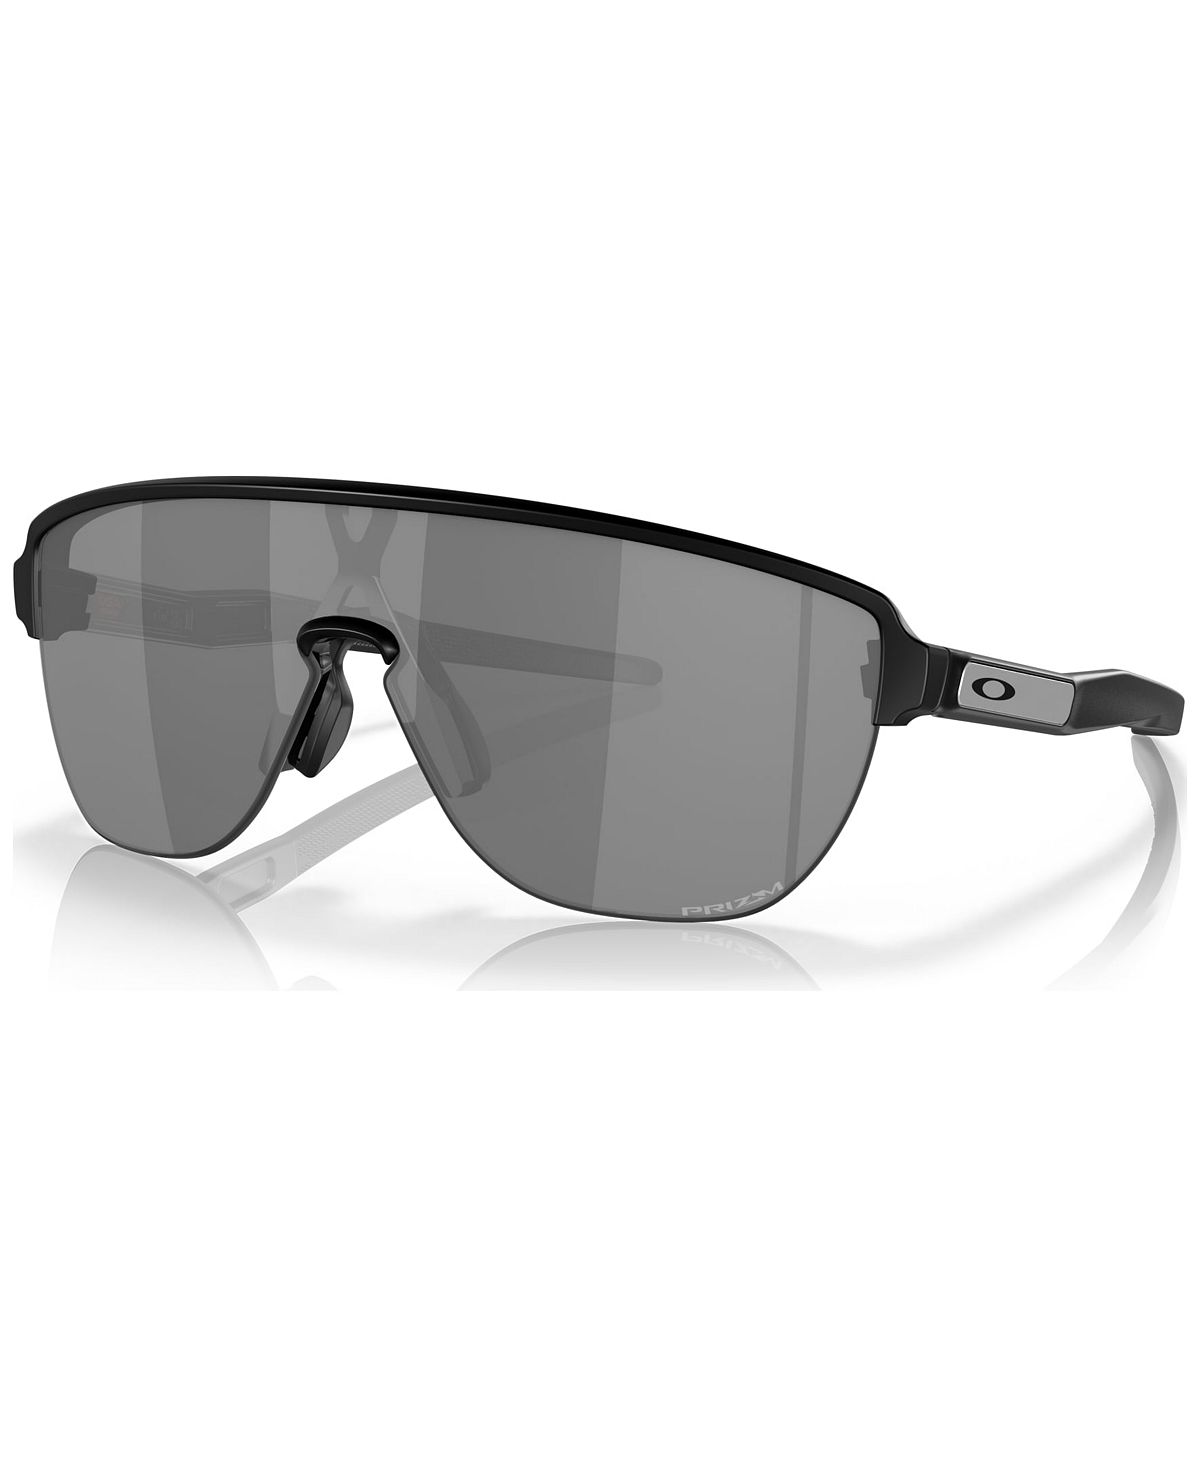 Мужские солнцезащитные очки для коридора, OO9248 Oakley pfi 1100mbk matte black 160 мл 0849c001